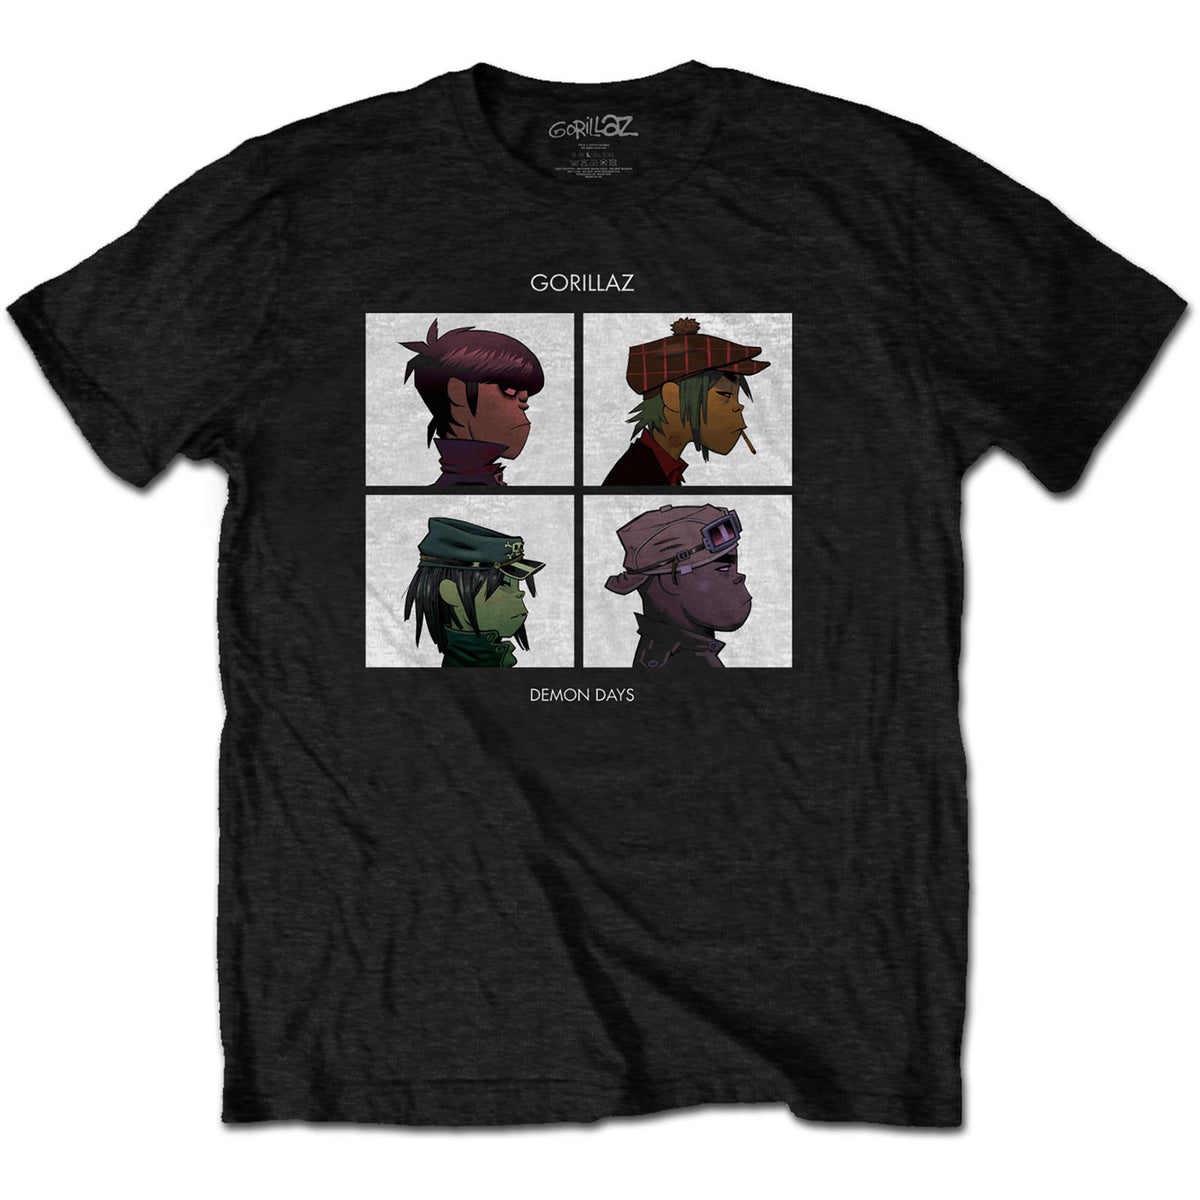 Gorillaz - Demon Days - T-Shirt